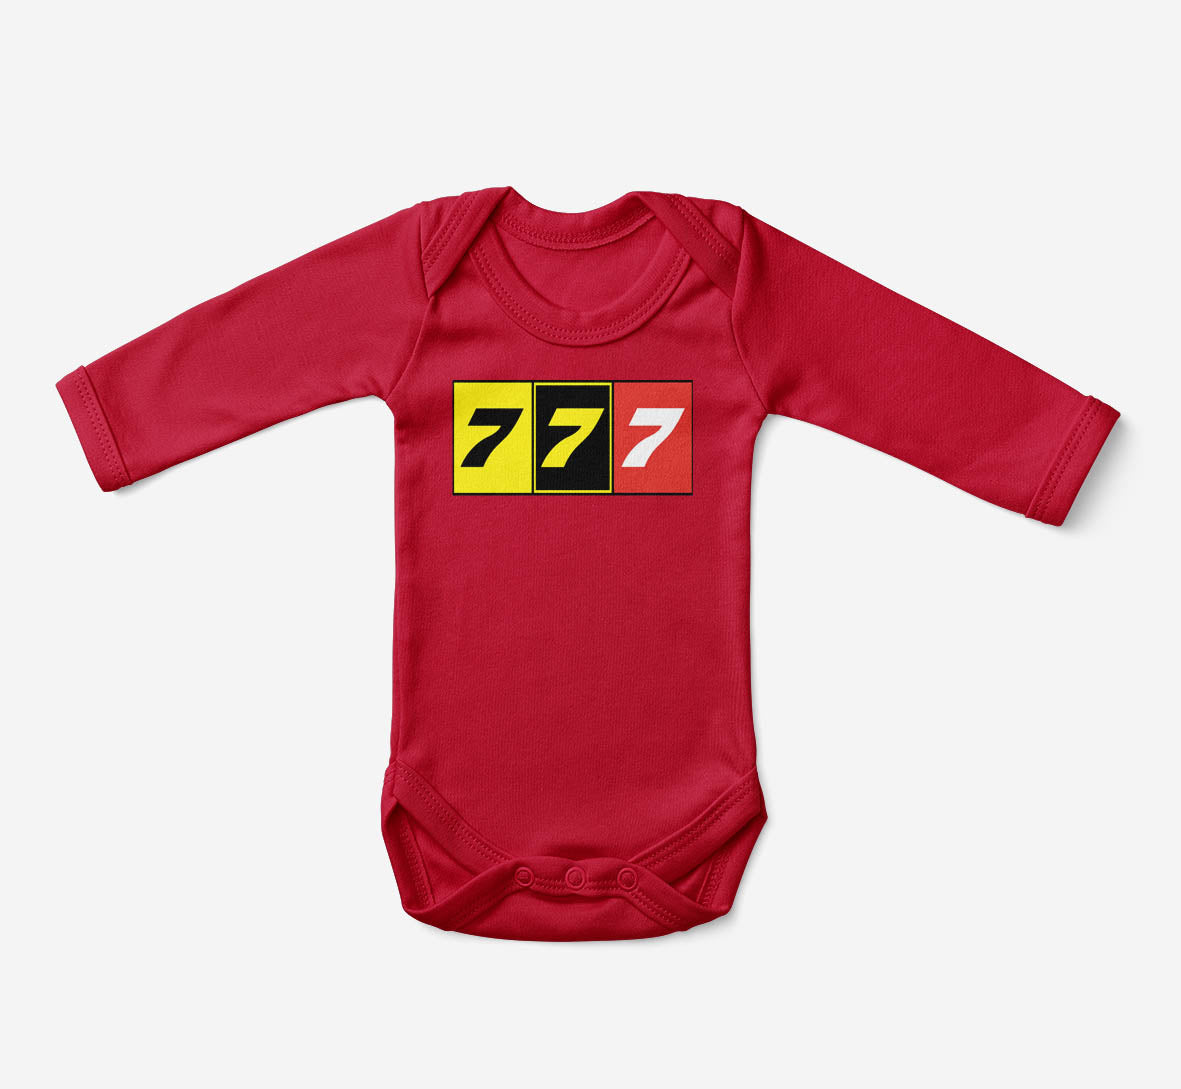 Flat Colourful 777 Designed Baby Bodysuits